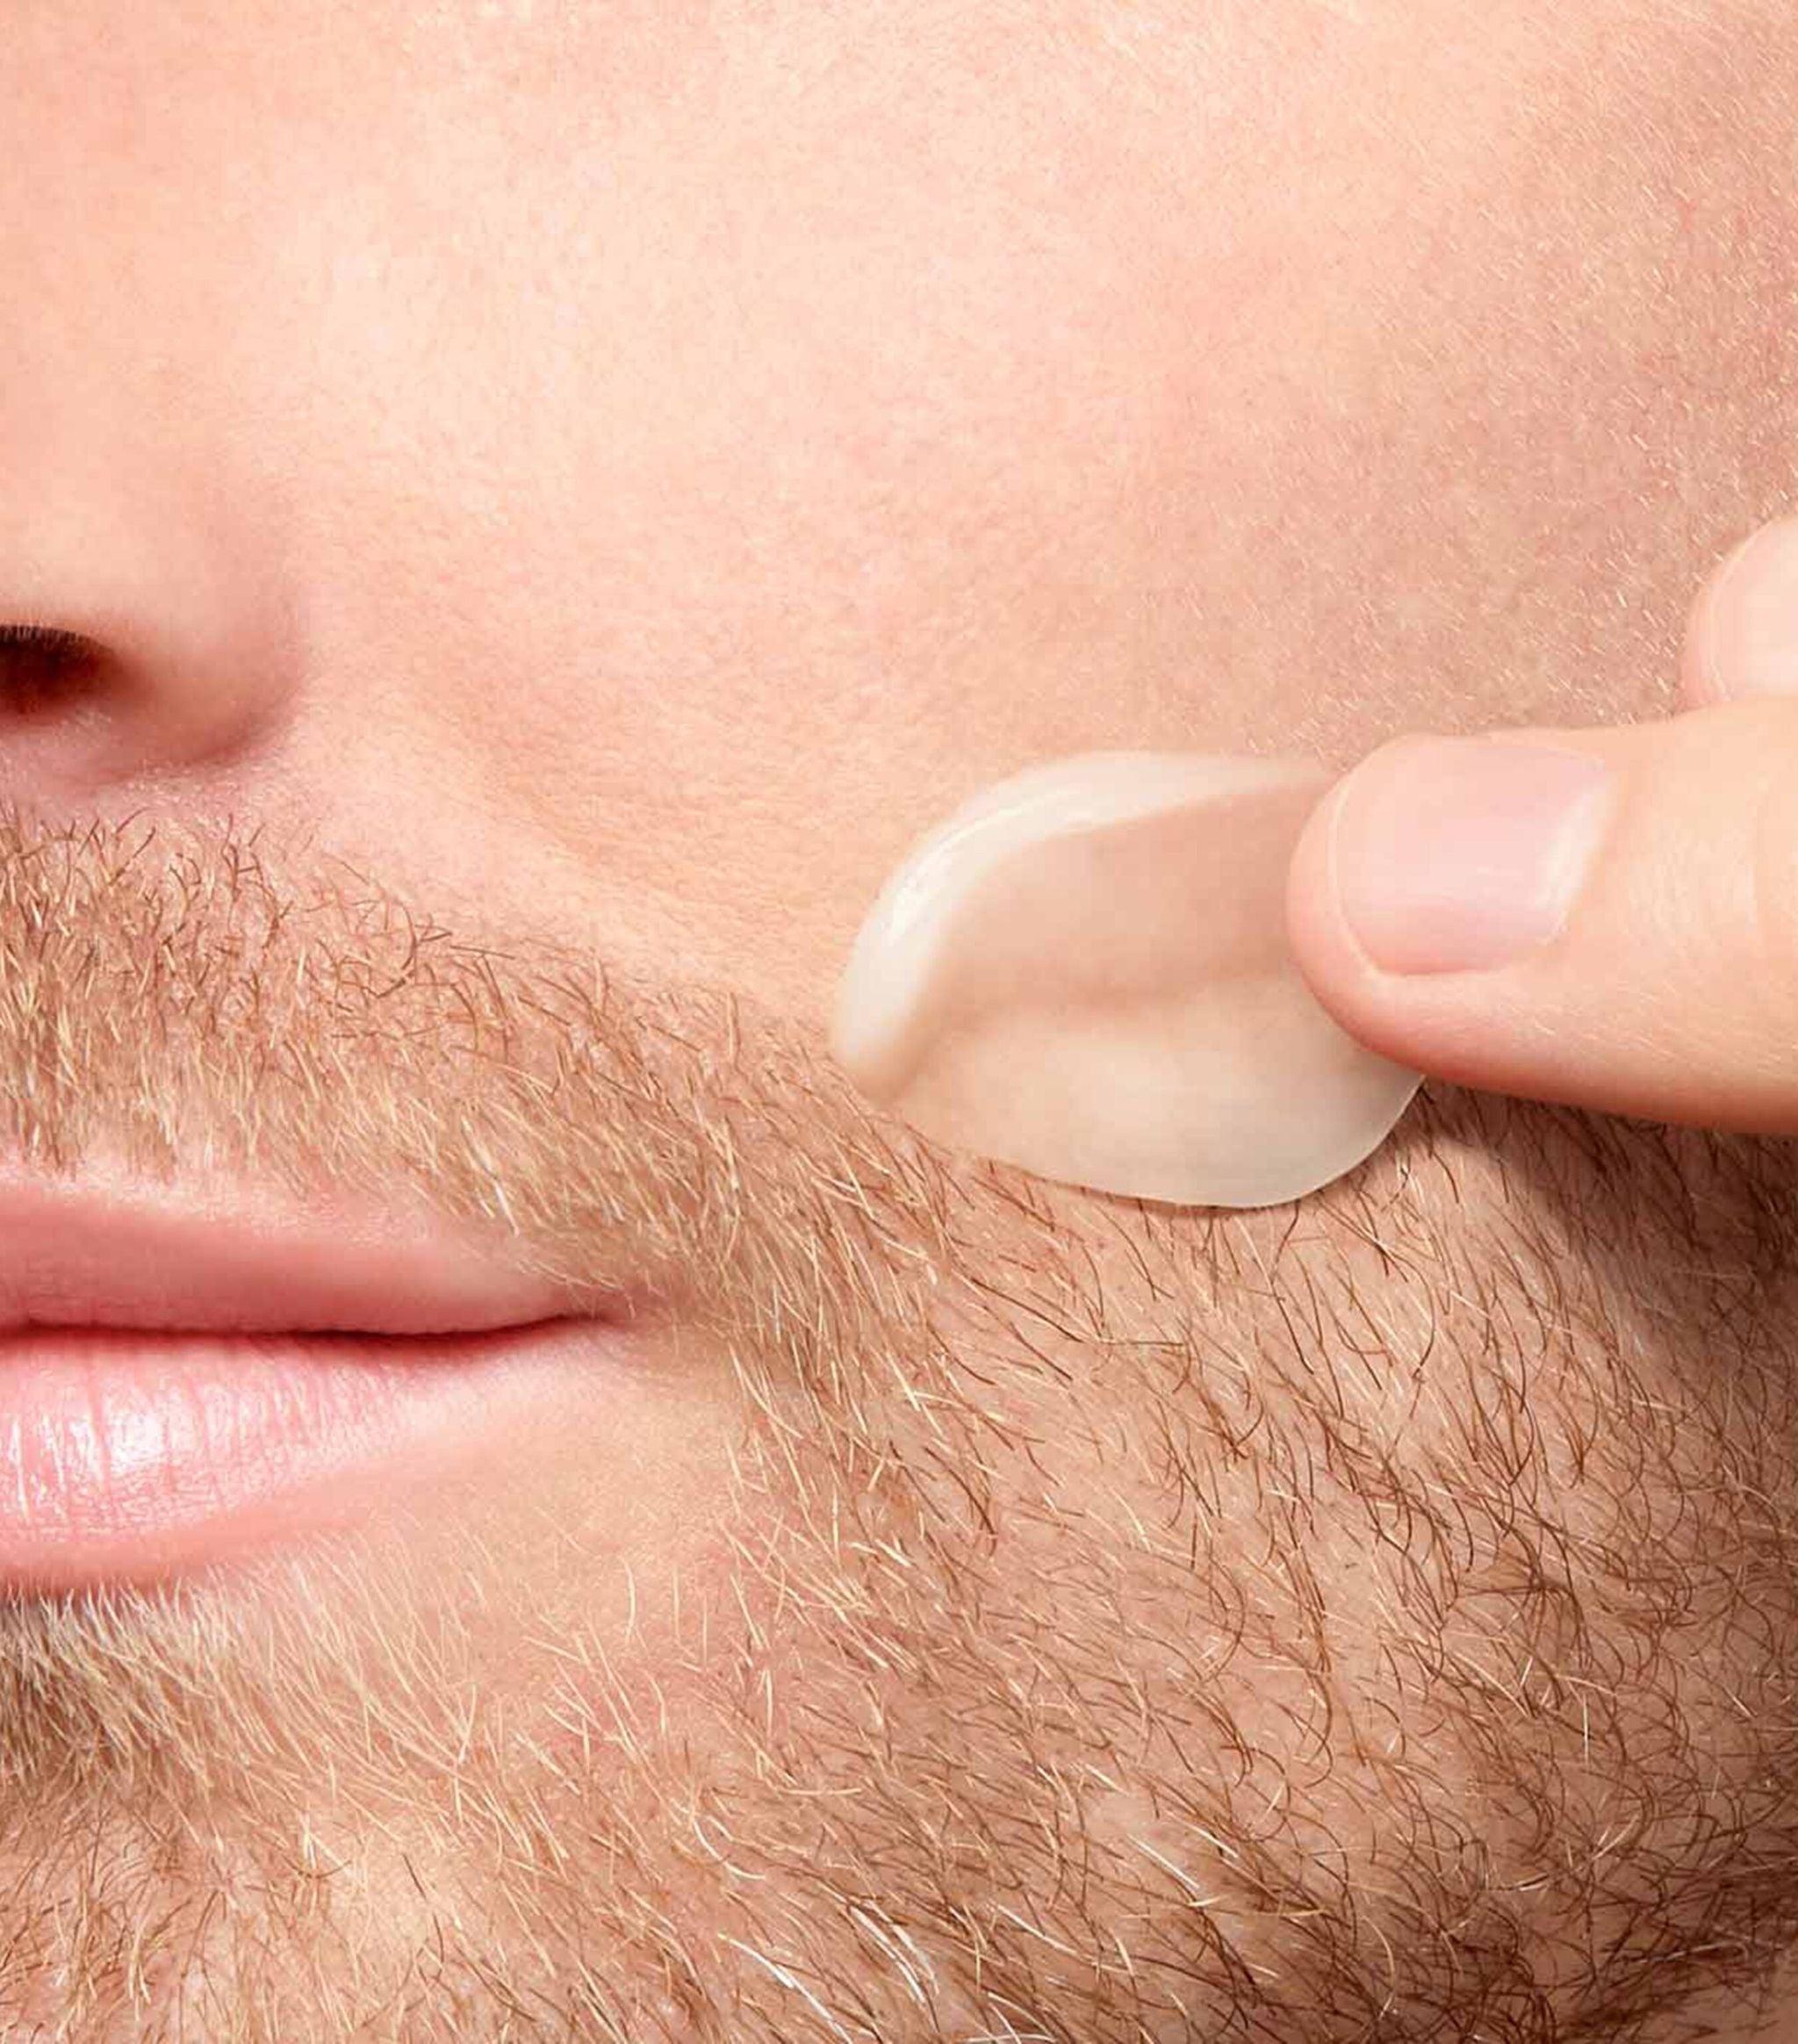 ClarinsMen Aftershave Soothing Gel (75ml) Men's Toiletries Harrods   